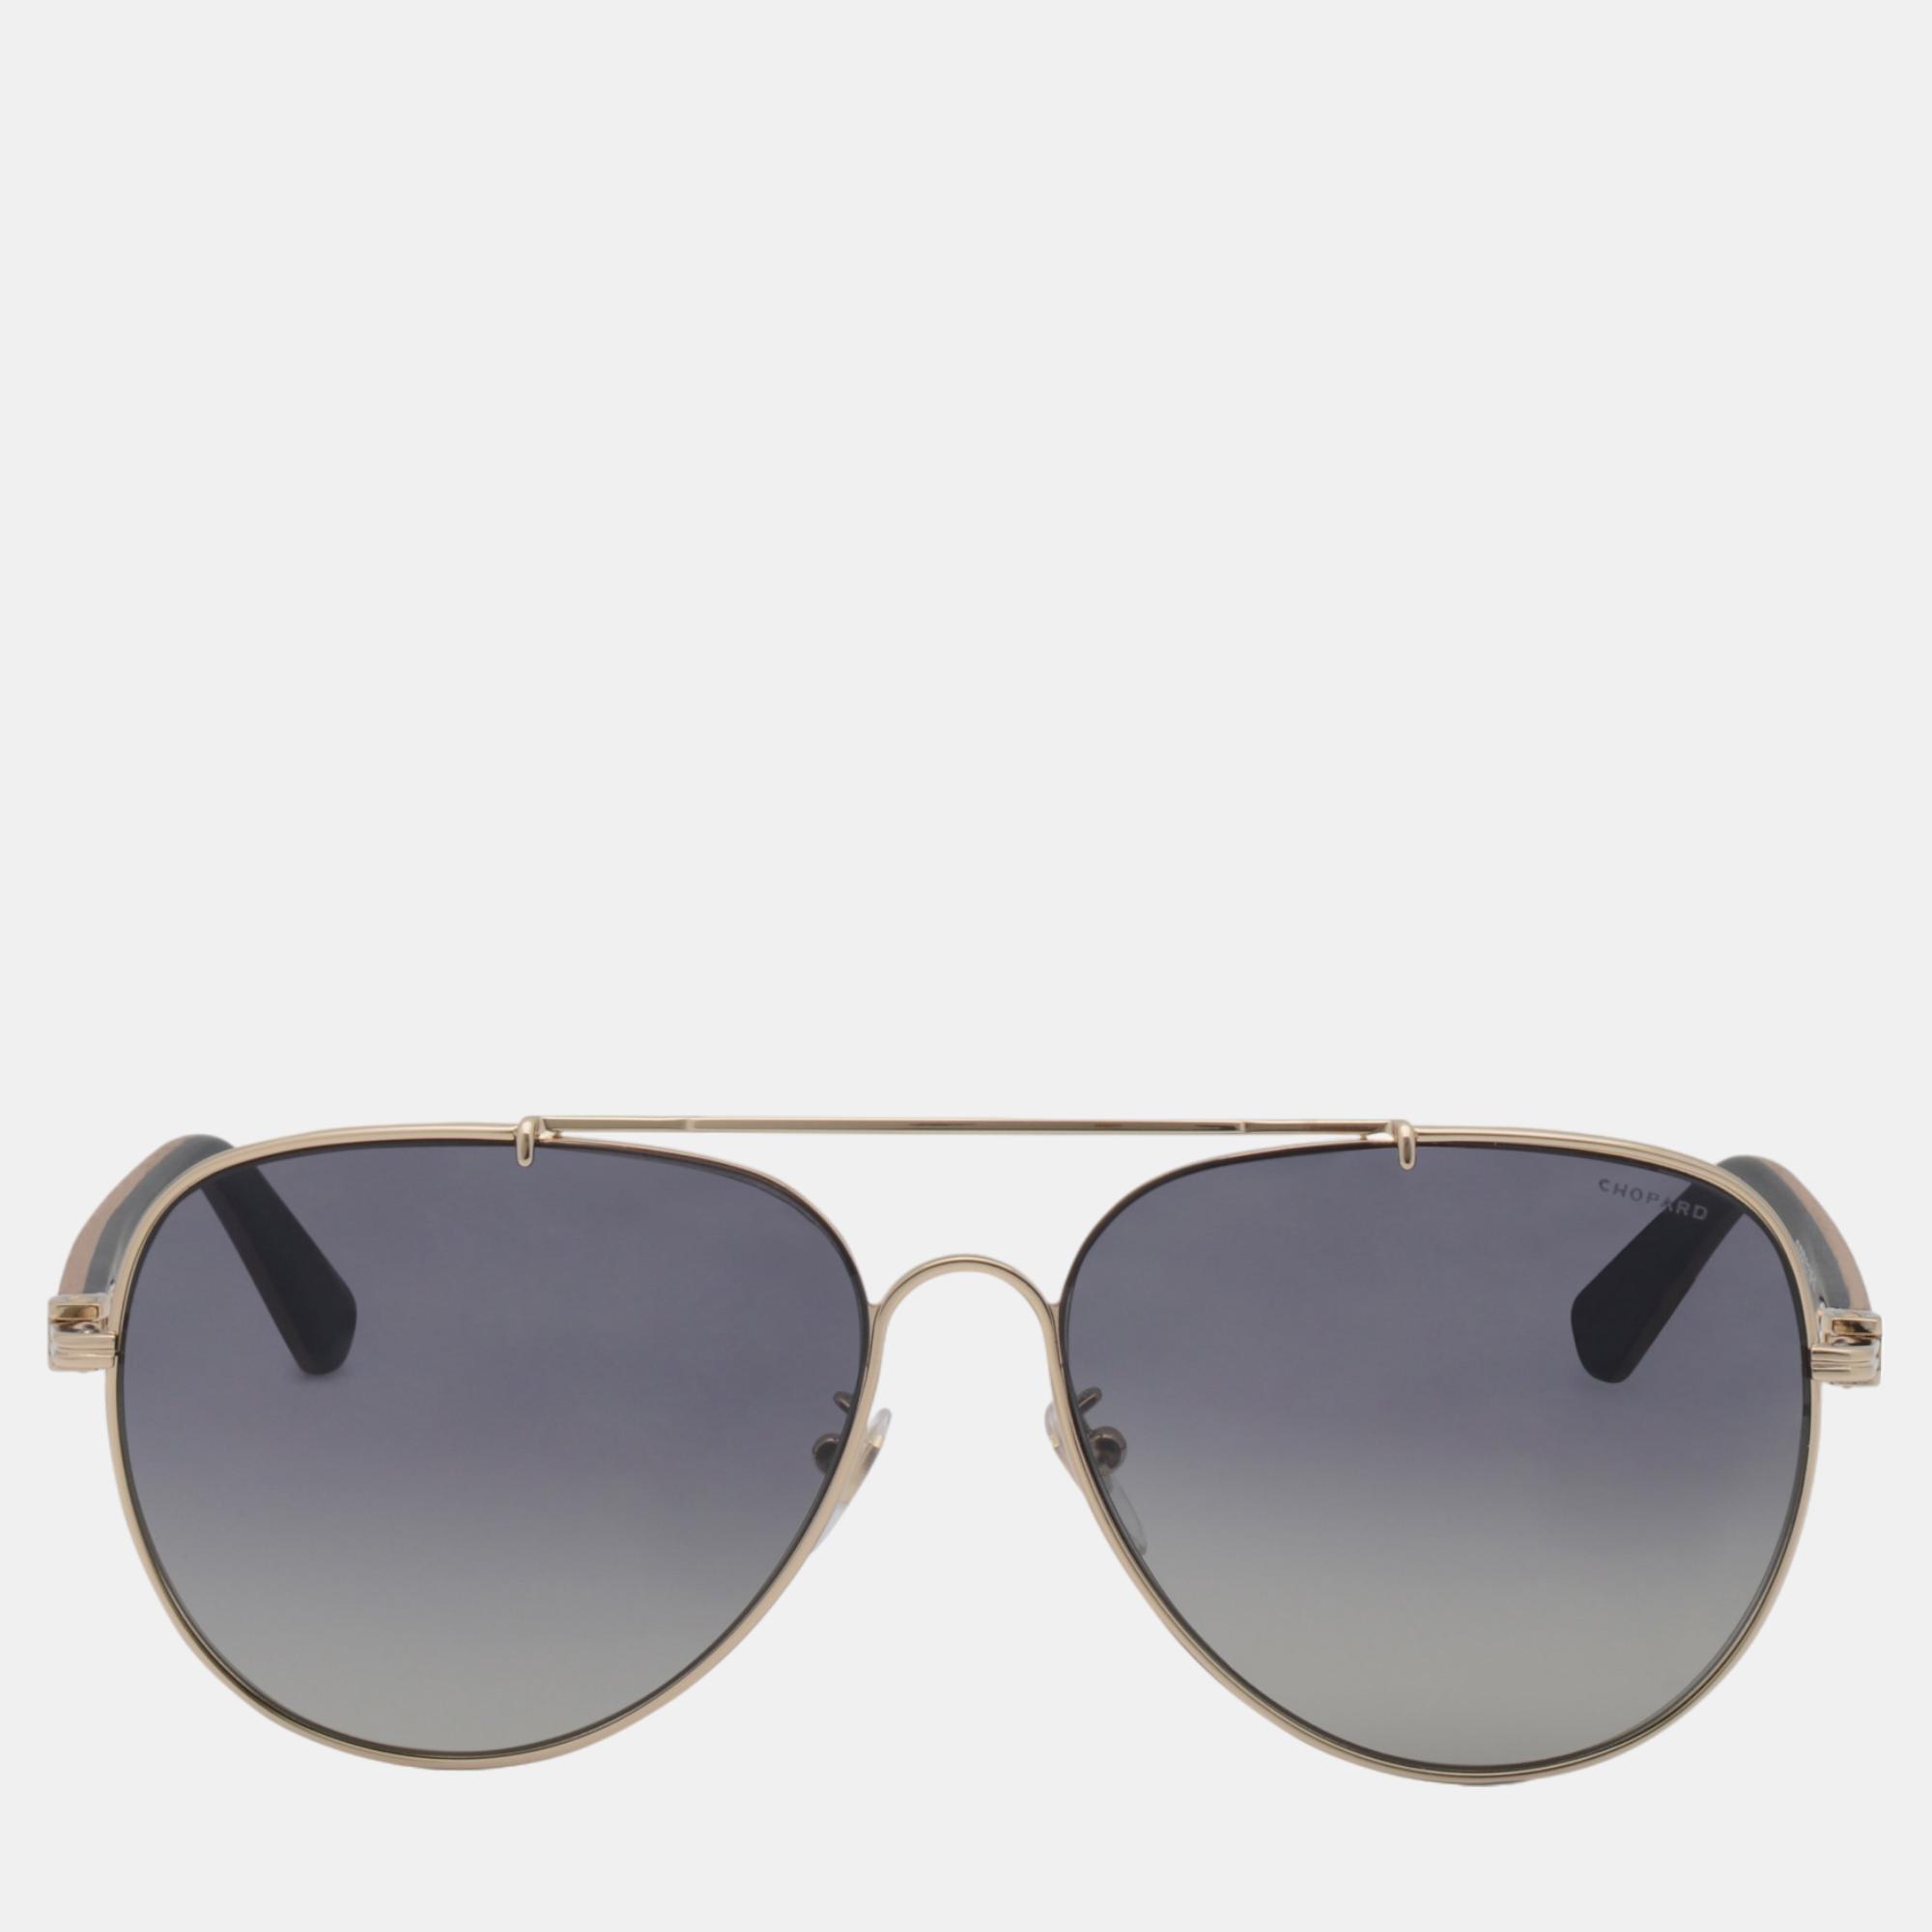 Chopard shiny rose gold, brown & smoke gradient aviator sunglasses